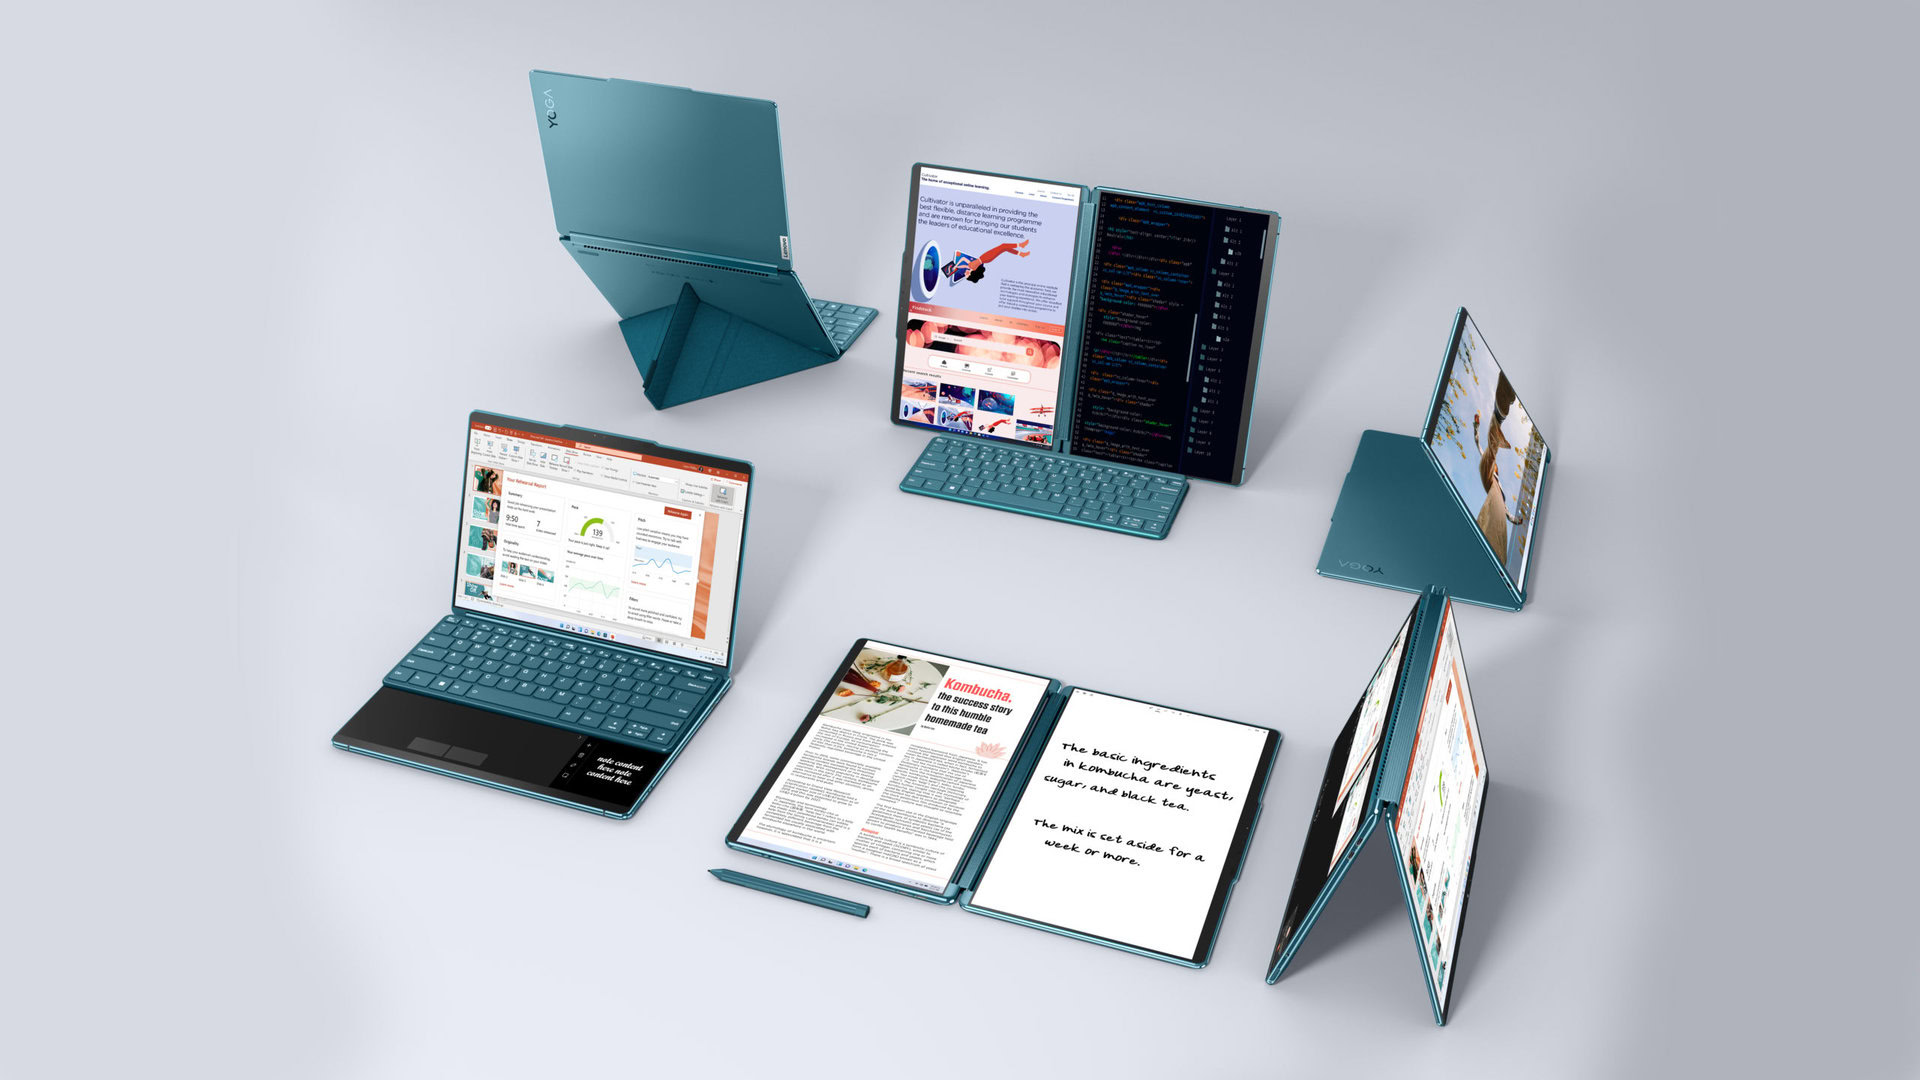 01 YogaBook 9i Hero Multi Modes